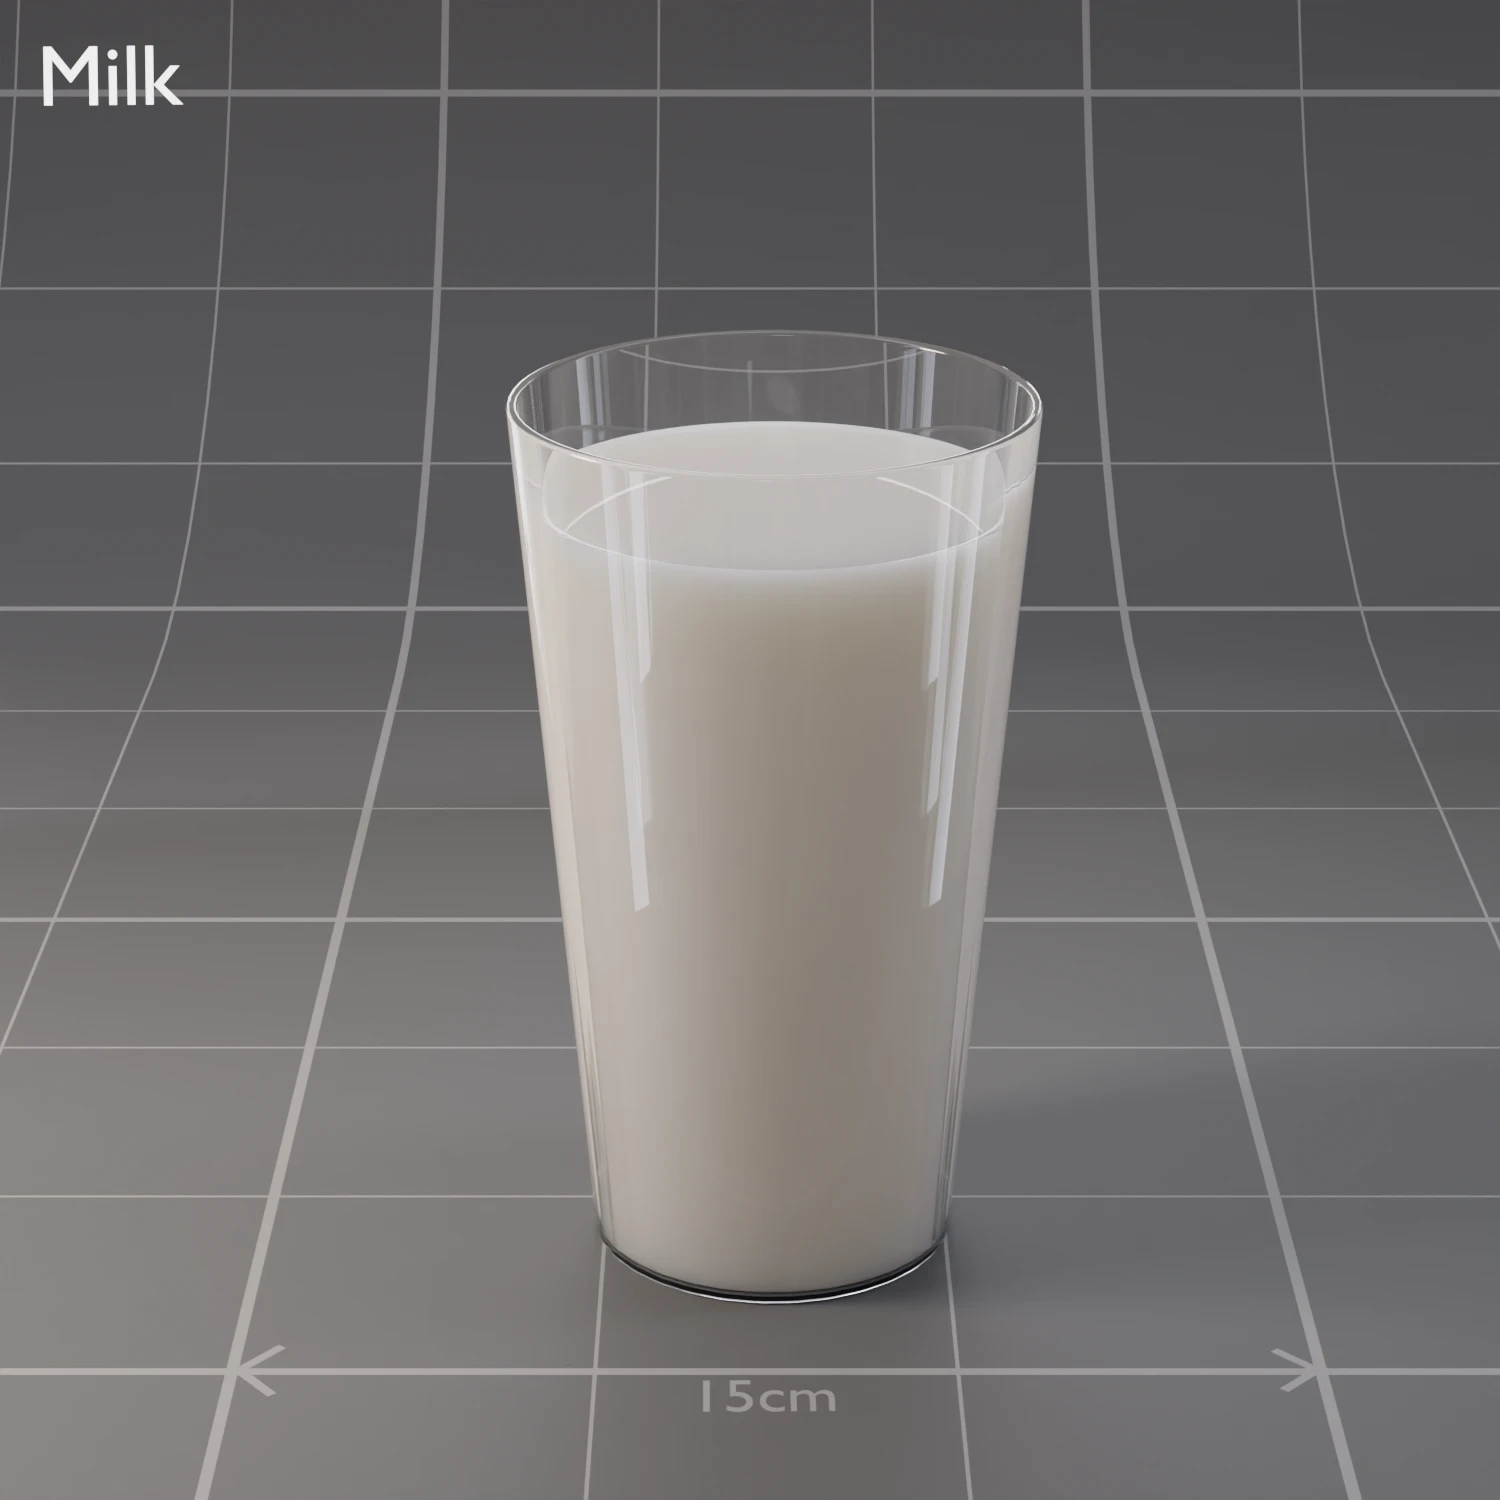 /pr/image/mats/Milk.WebP